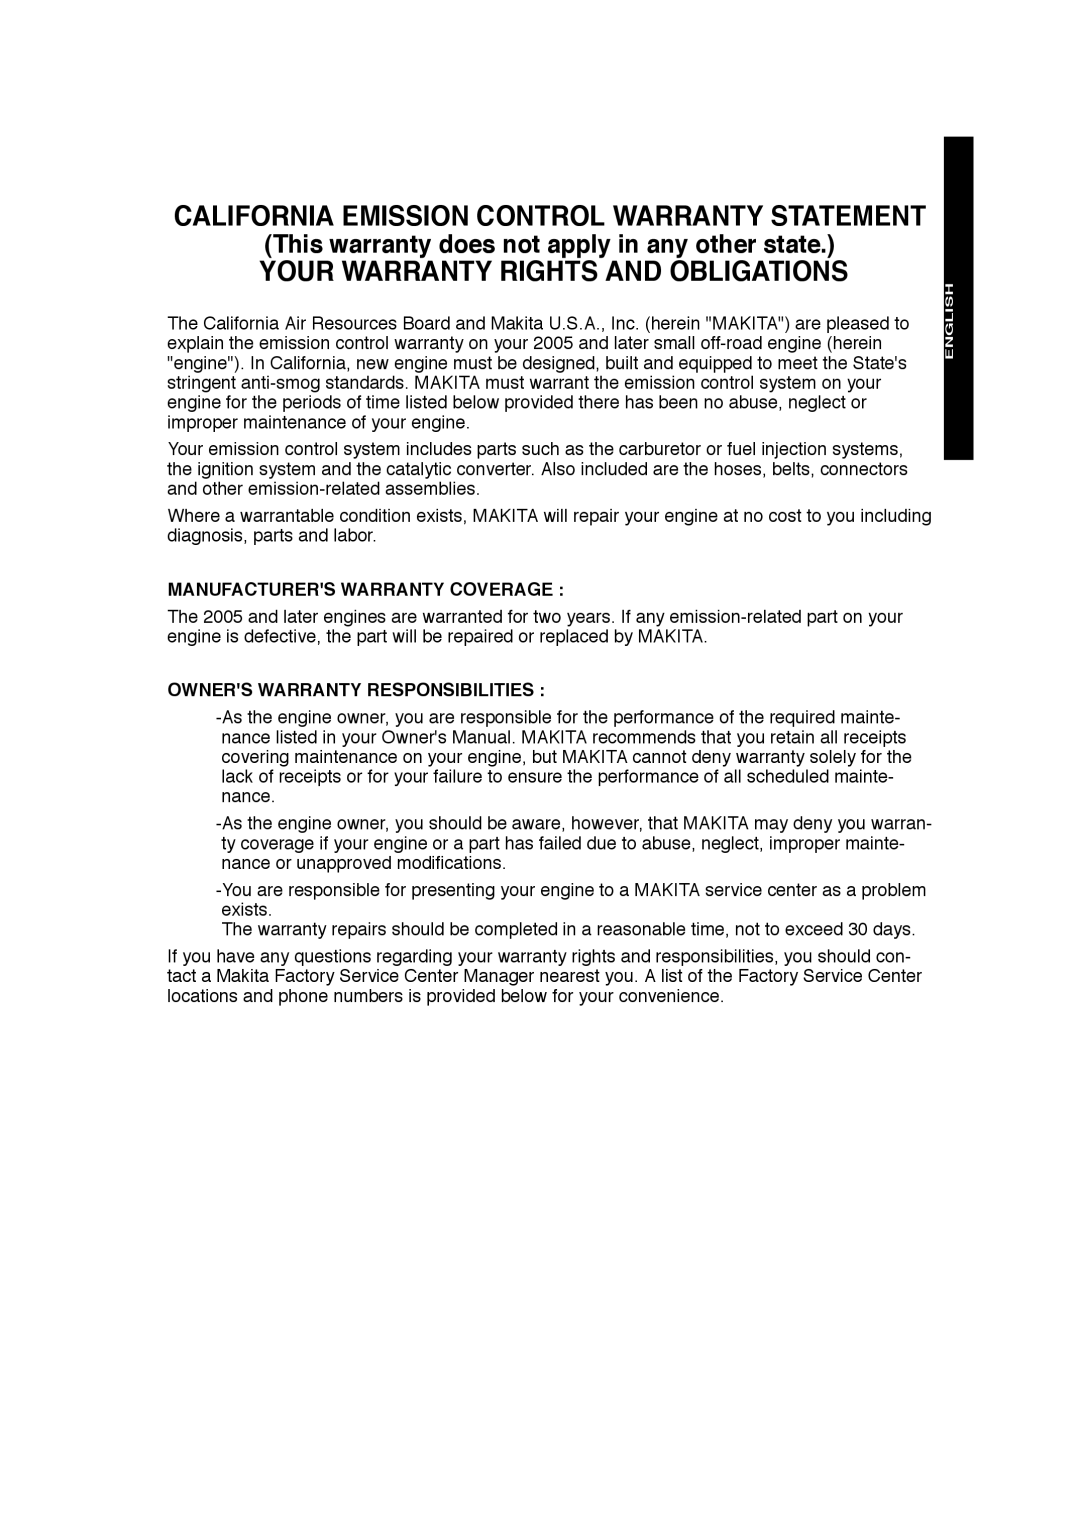 Makita EW320TR, EW220R, EW120R California Emission Control Warranty Statement, Your Warranty Rights And Obligations 